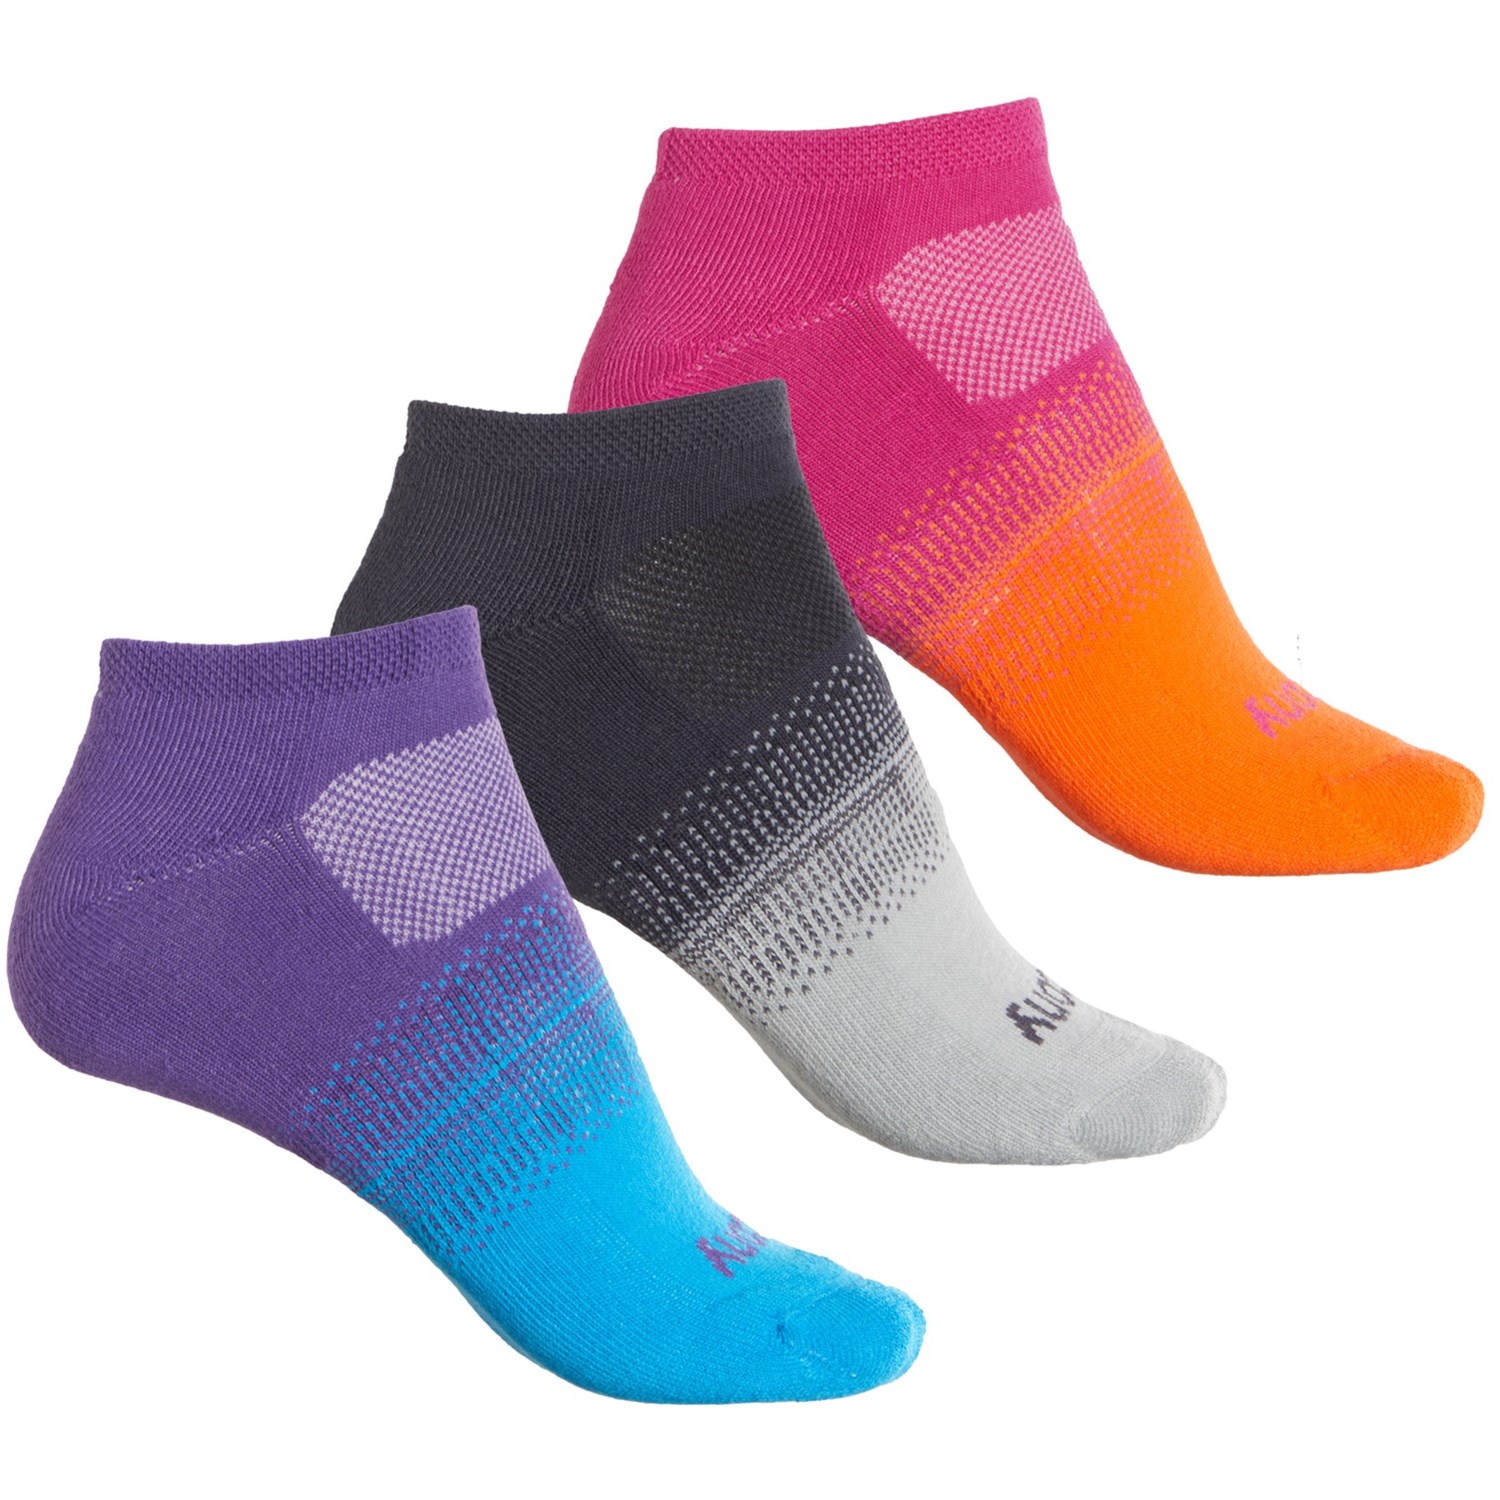 saucony women's running socks